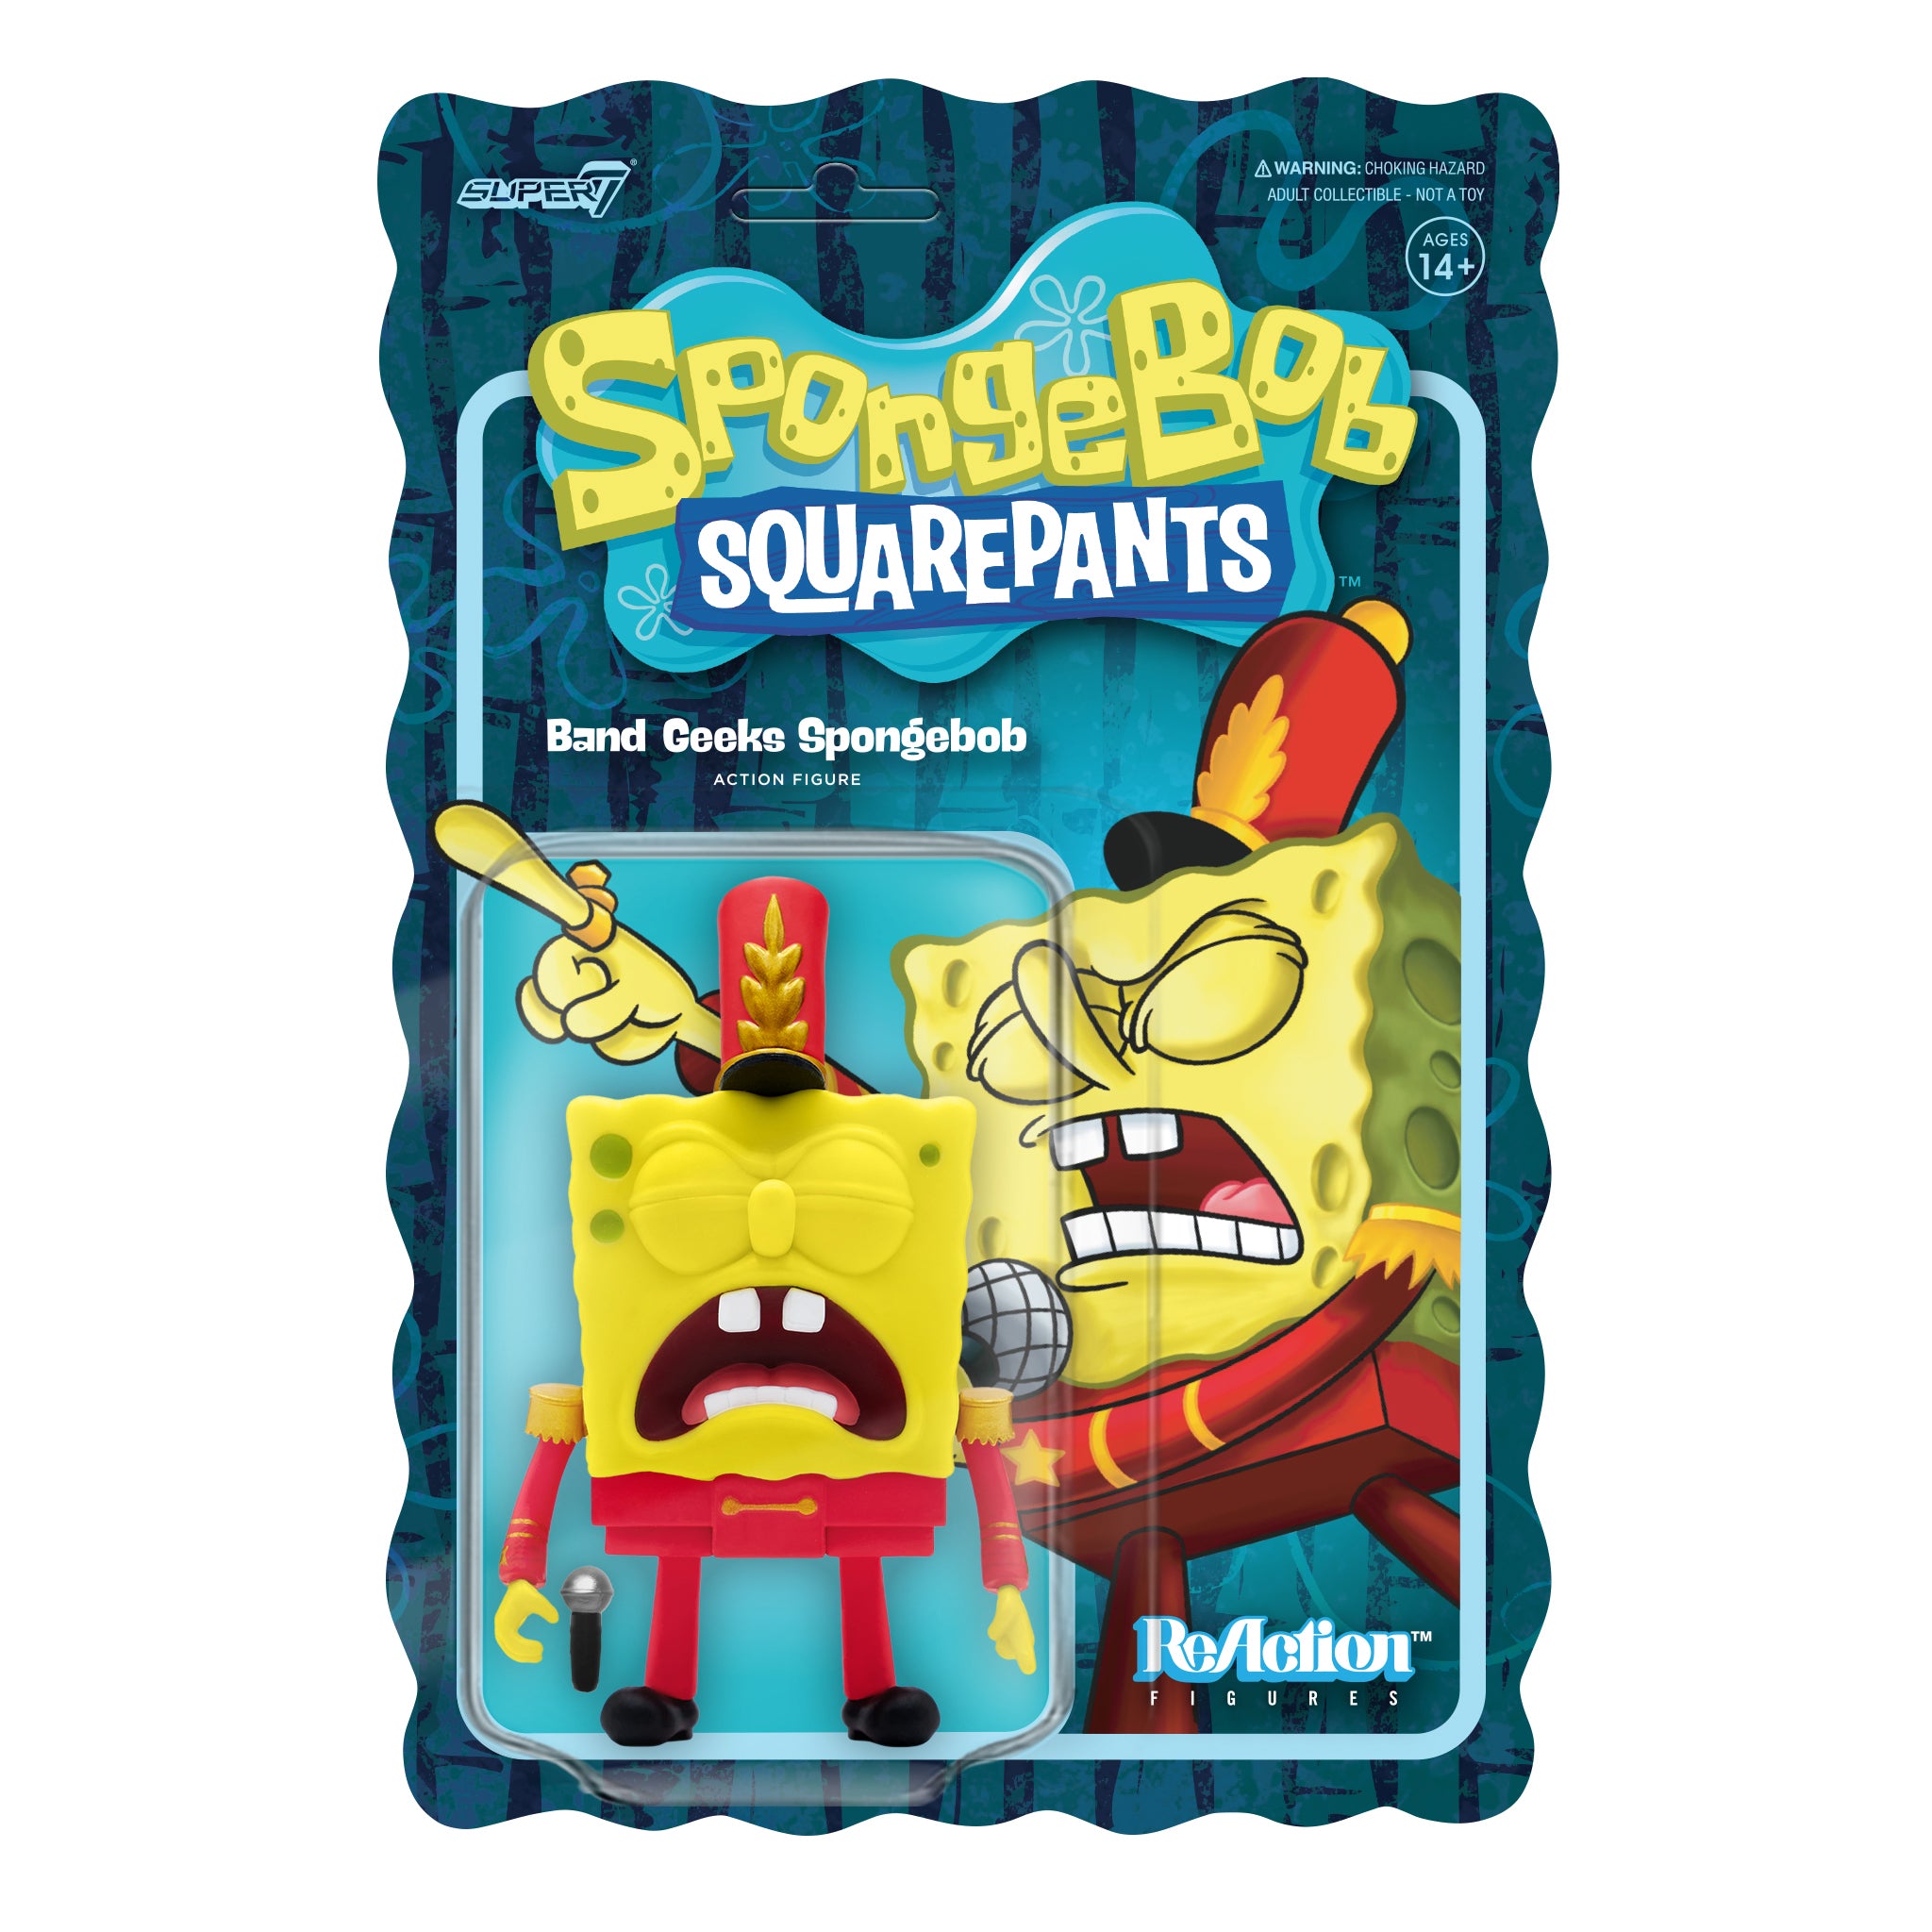 SpongeBob SquarePants ReAction Wave 2 - Band Geeks SpongeBob